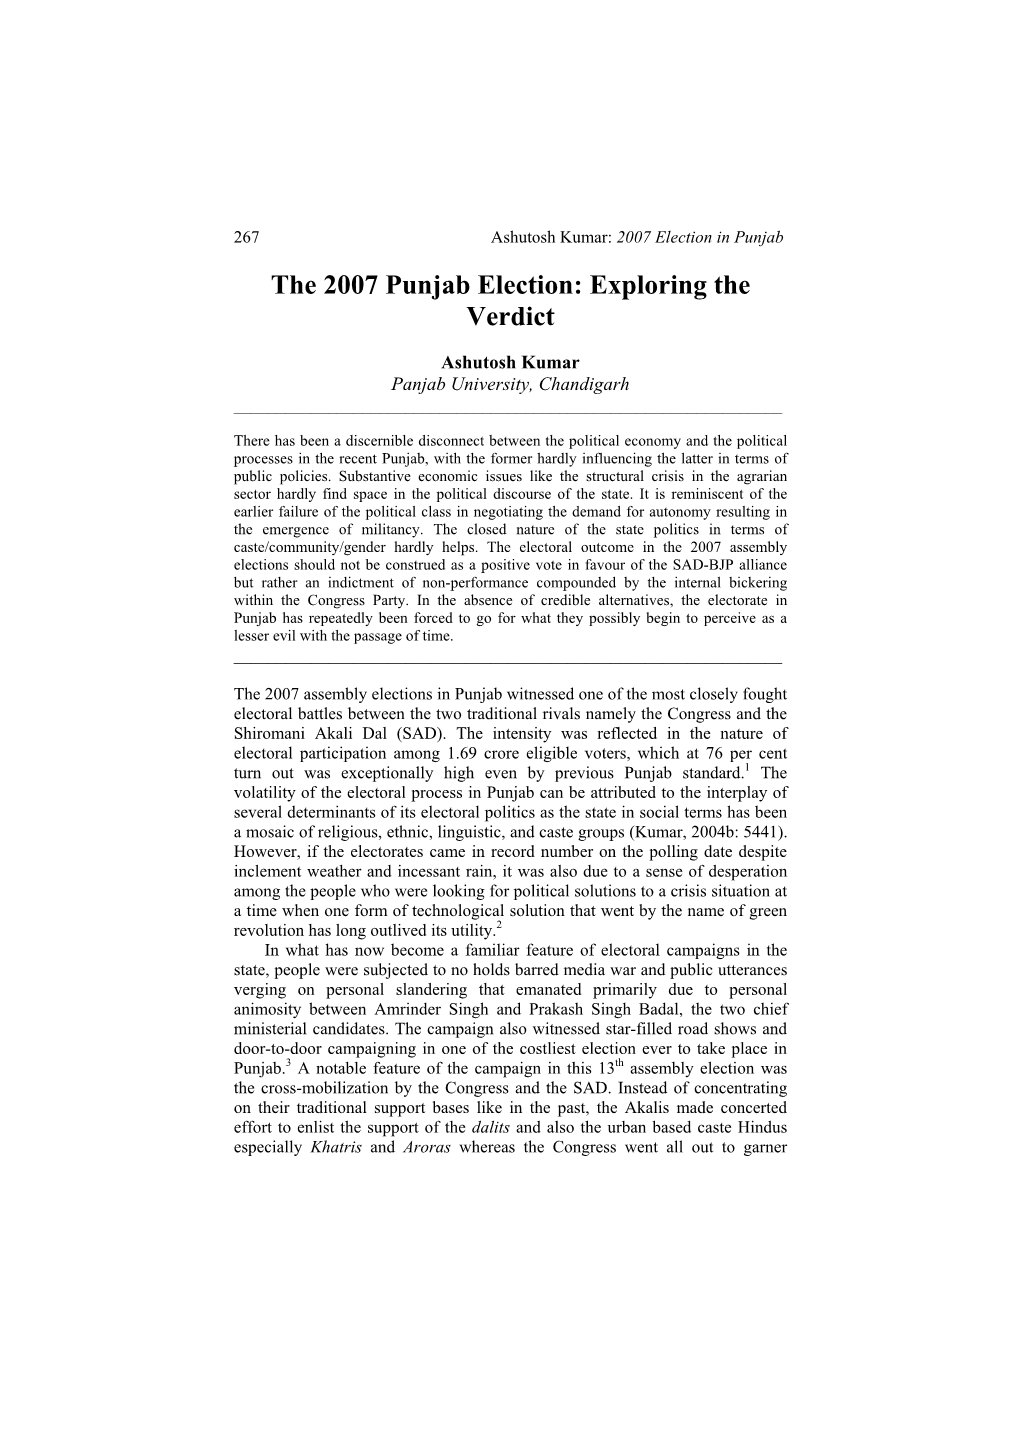 The 2007 Punjab Election: Exploring the Verdict